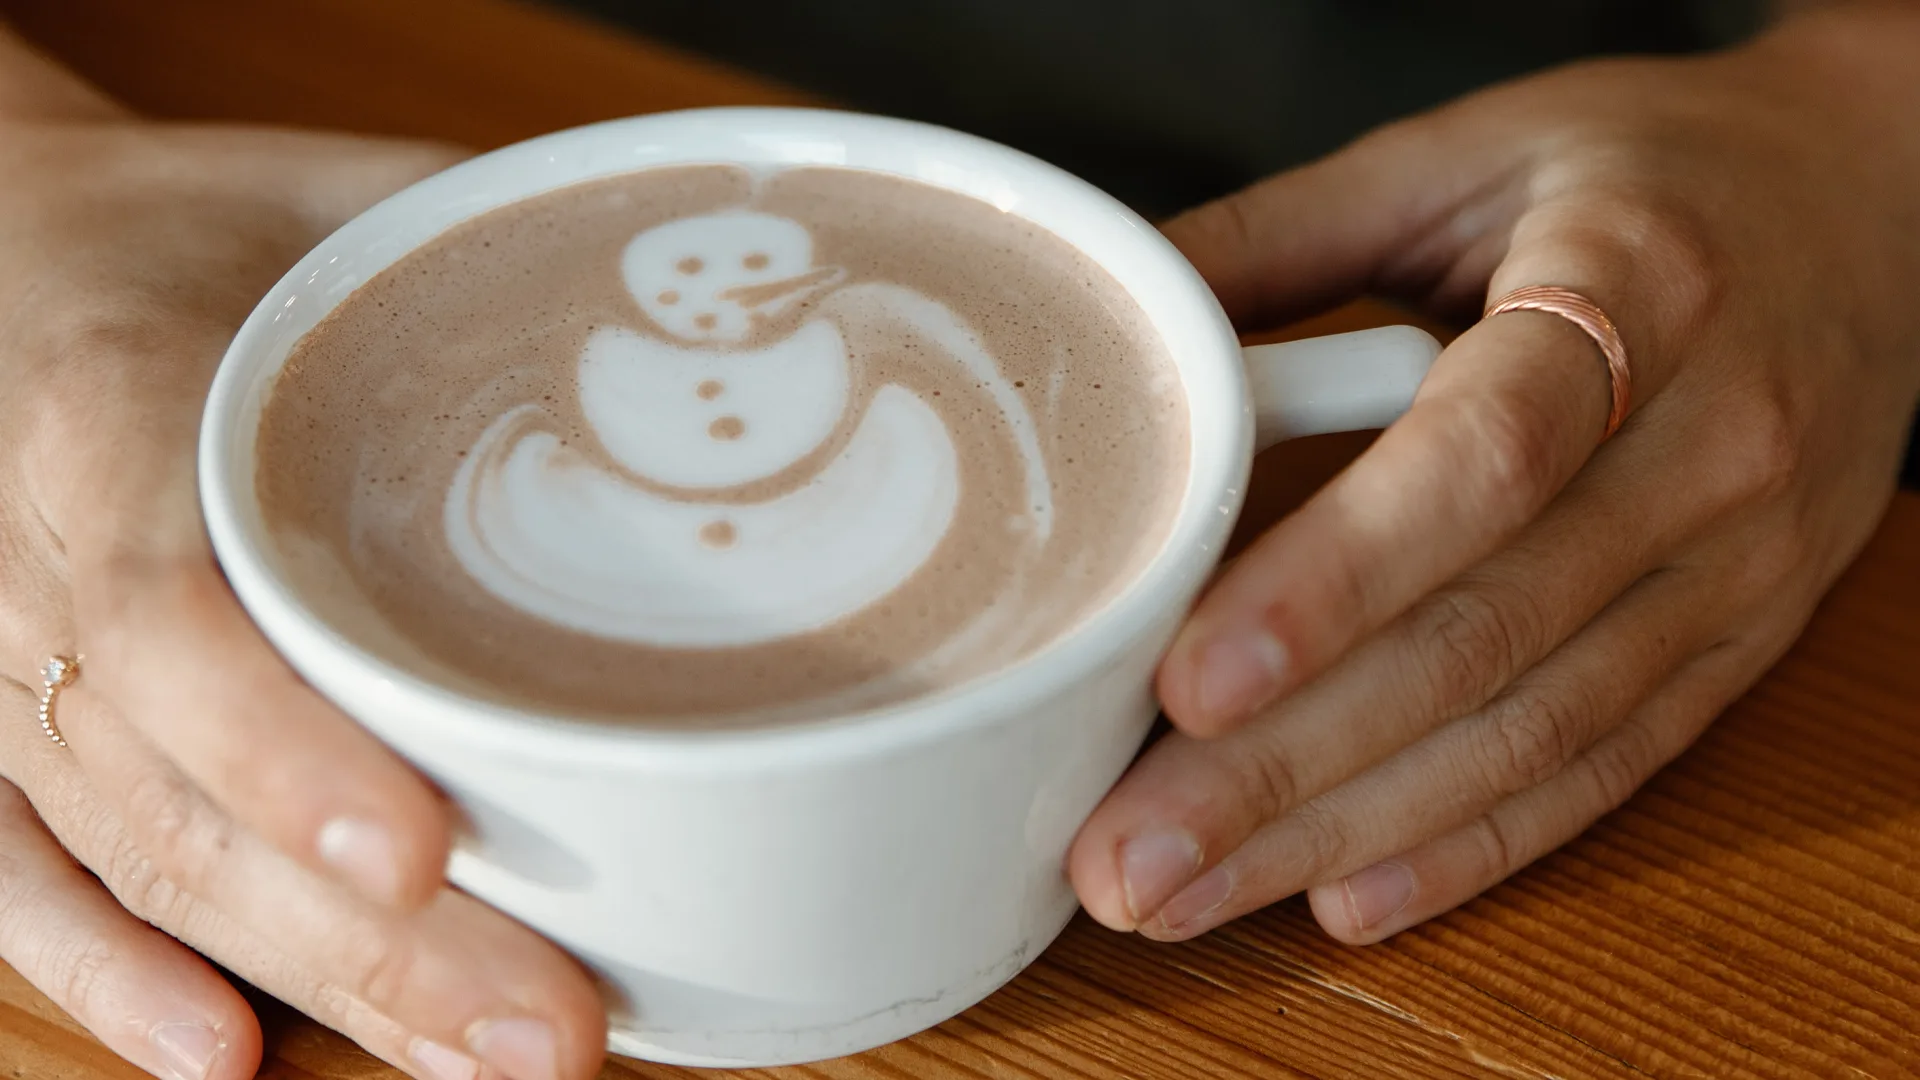 Art latte mettant en vedette un bonhomme de neige.